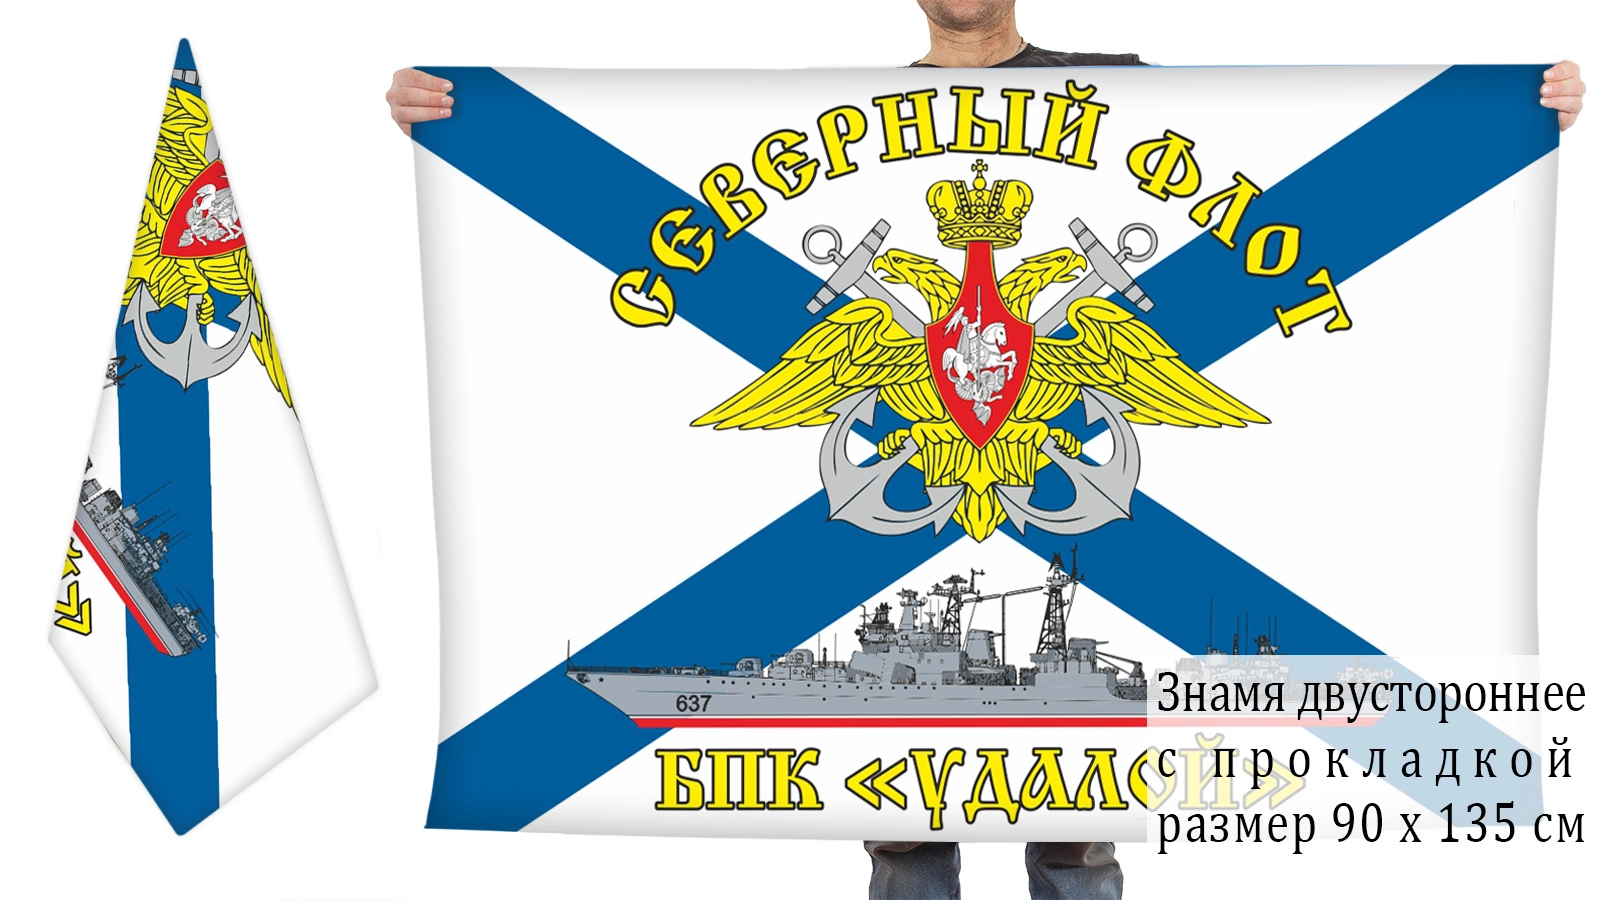 Двусторонний флаг БПК "Удалой"